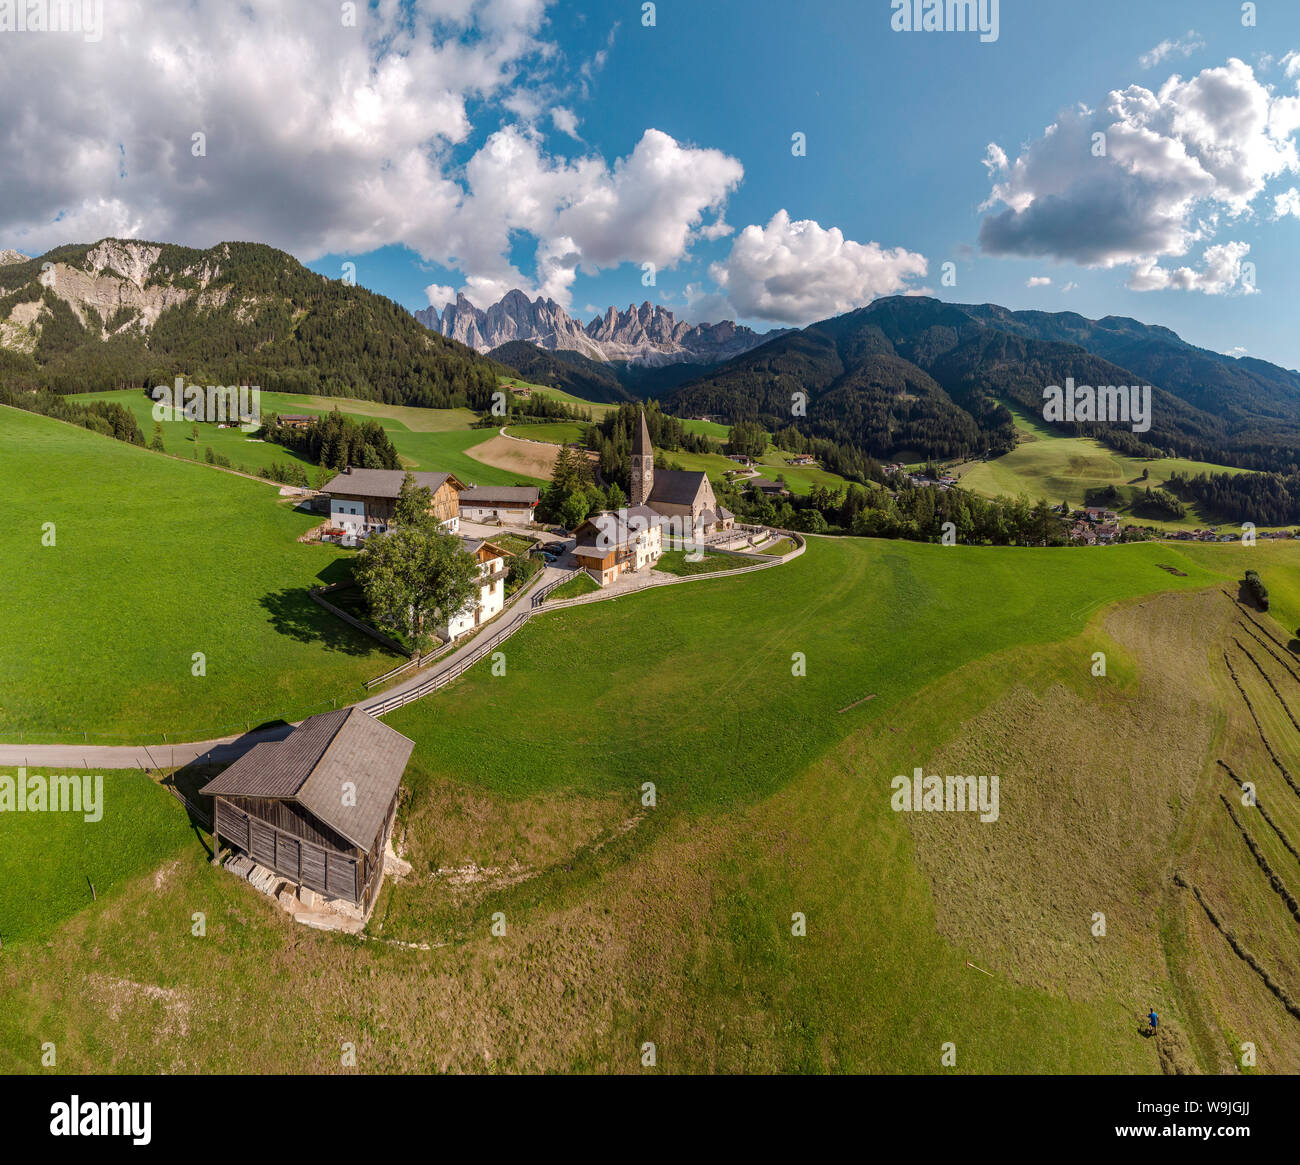 The Villnöß valley and the view towards the Geisler Gruppe mountains, Sankt Magdalena - Santa Maddalena Alta,   , Südtirol - Alto Adige, Italy, 300713 Stock Photo